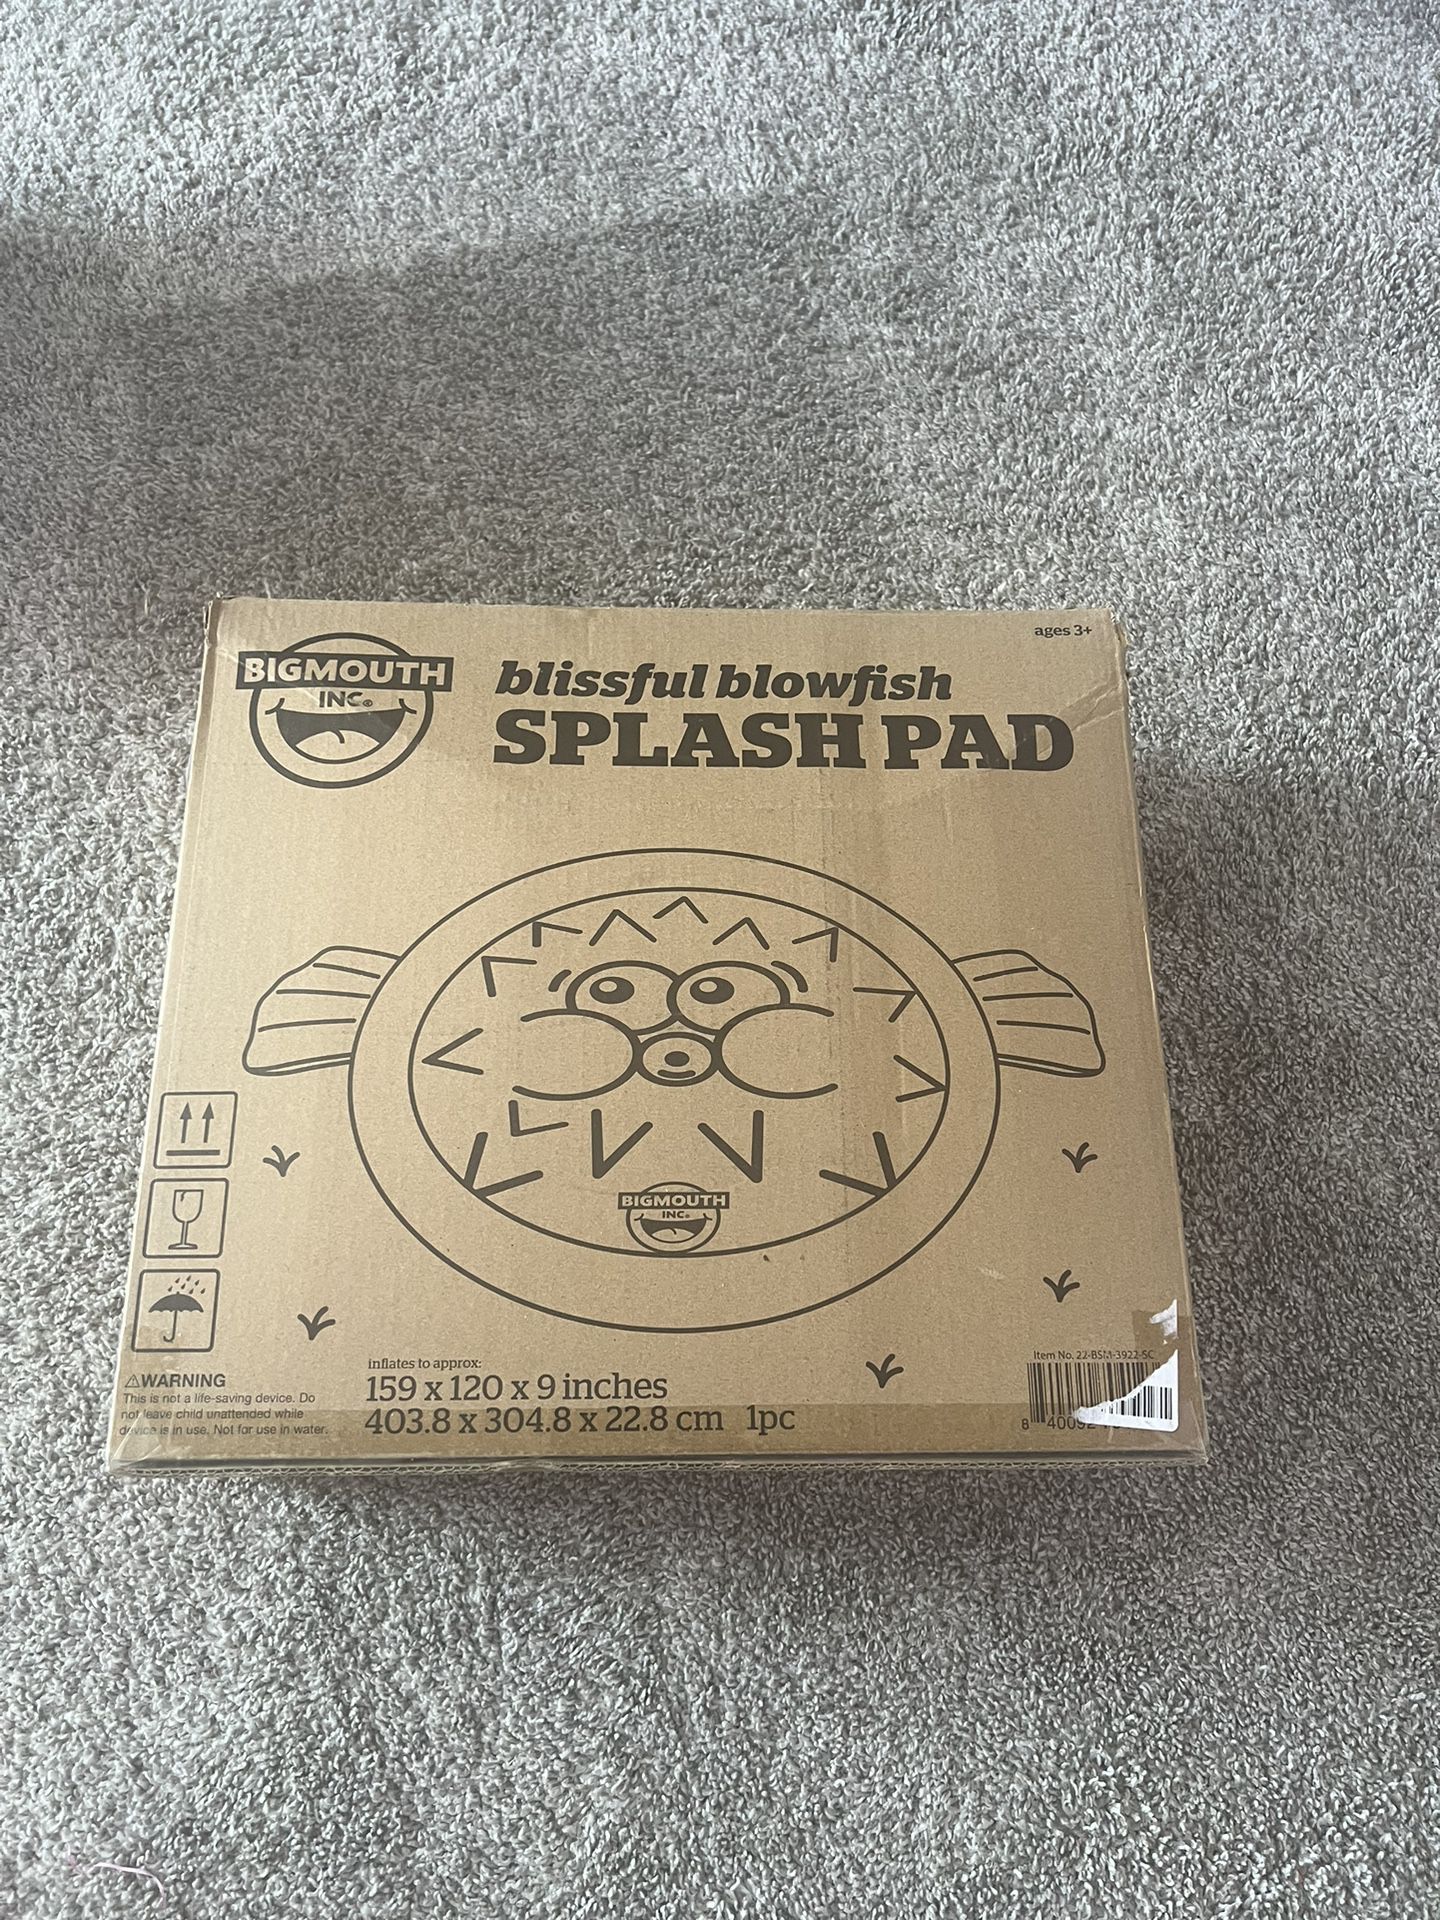 BigMouth Blissful blowfish SplashPad 